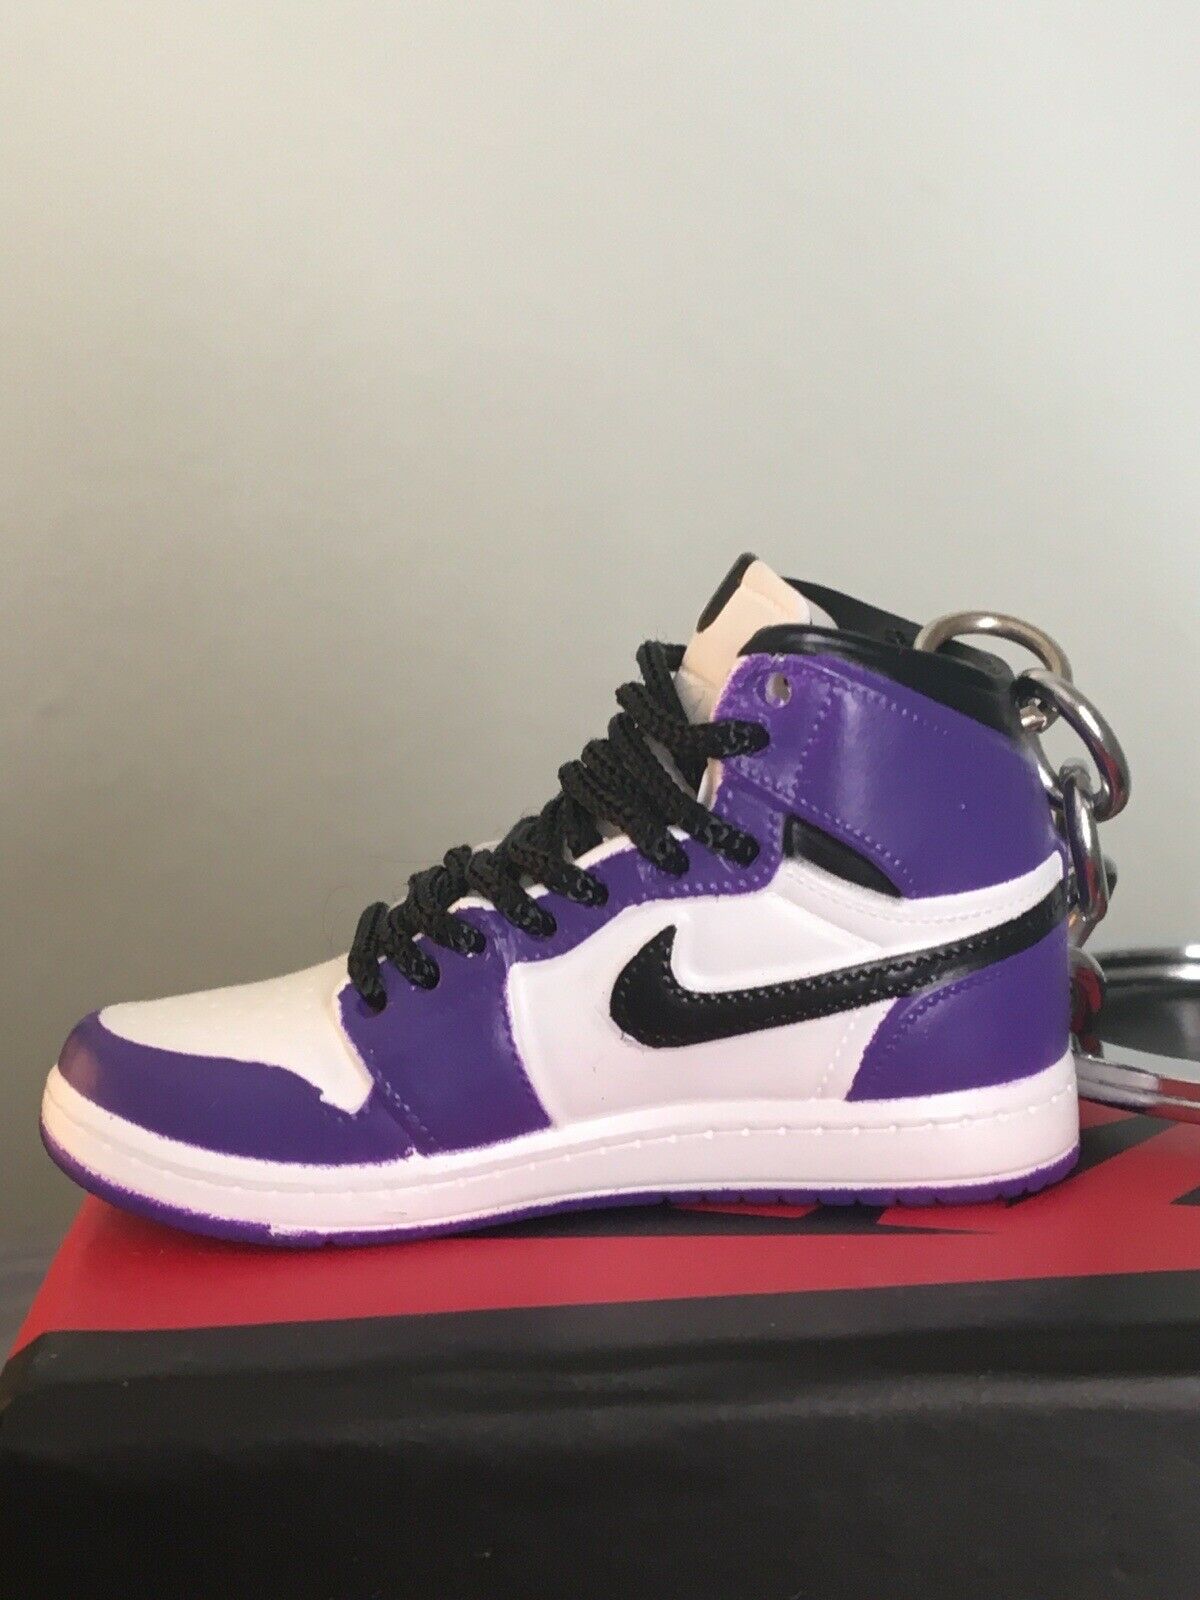 New Mini Air Jordan Nike shoes keychain Purple And white With Nike Box